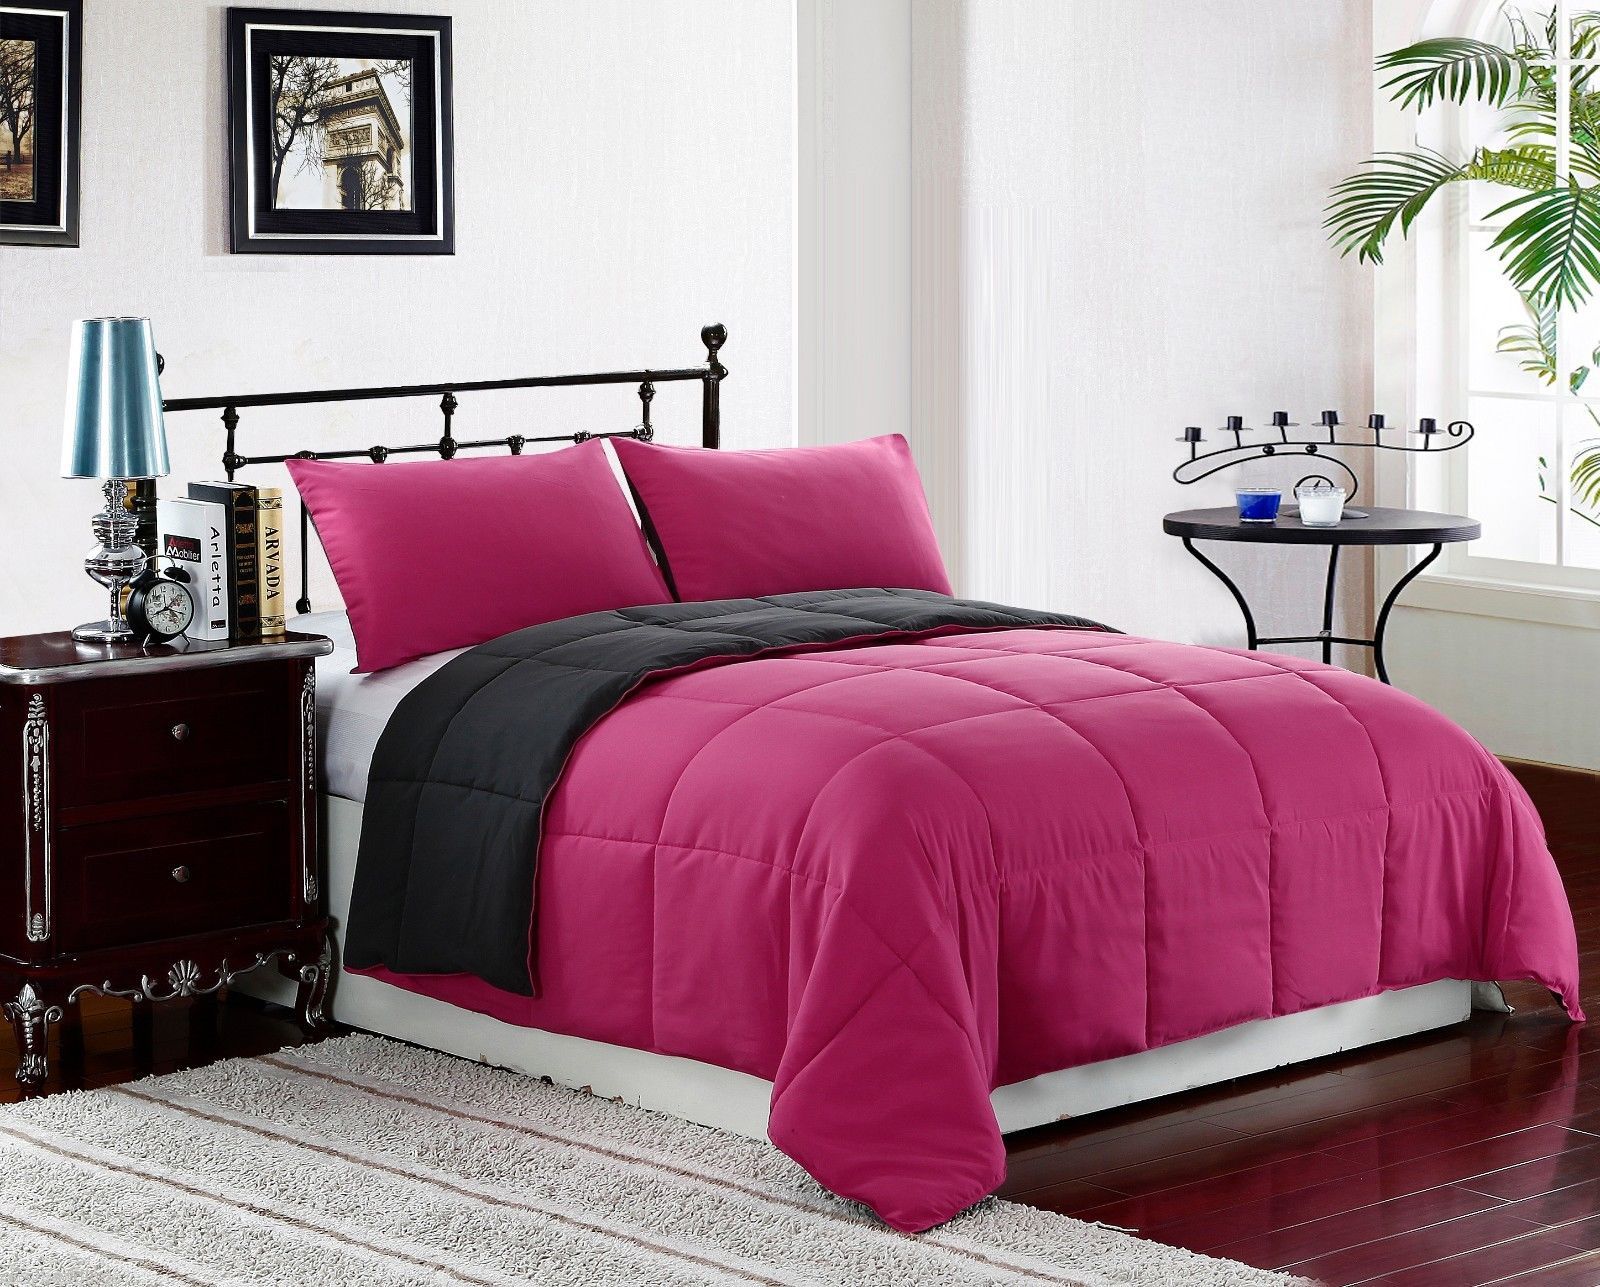 GREY/PINK 3pc FULL/QUEEN Size Bed Reversible Down Alternative Comforter Set - $32.88